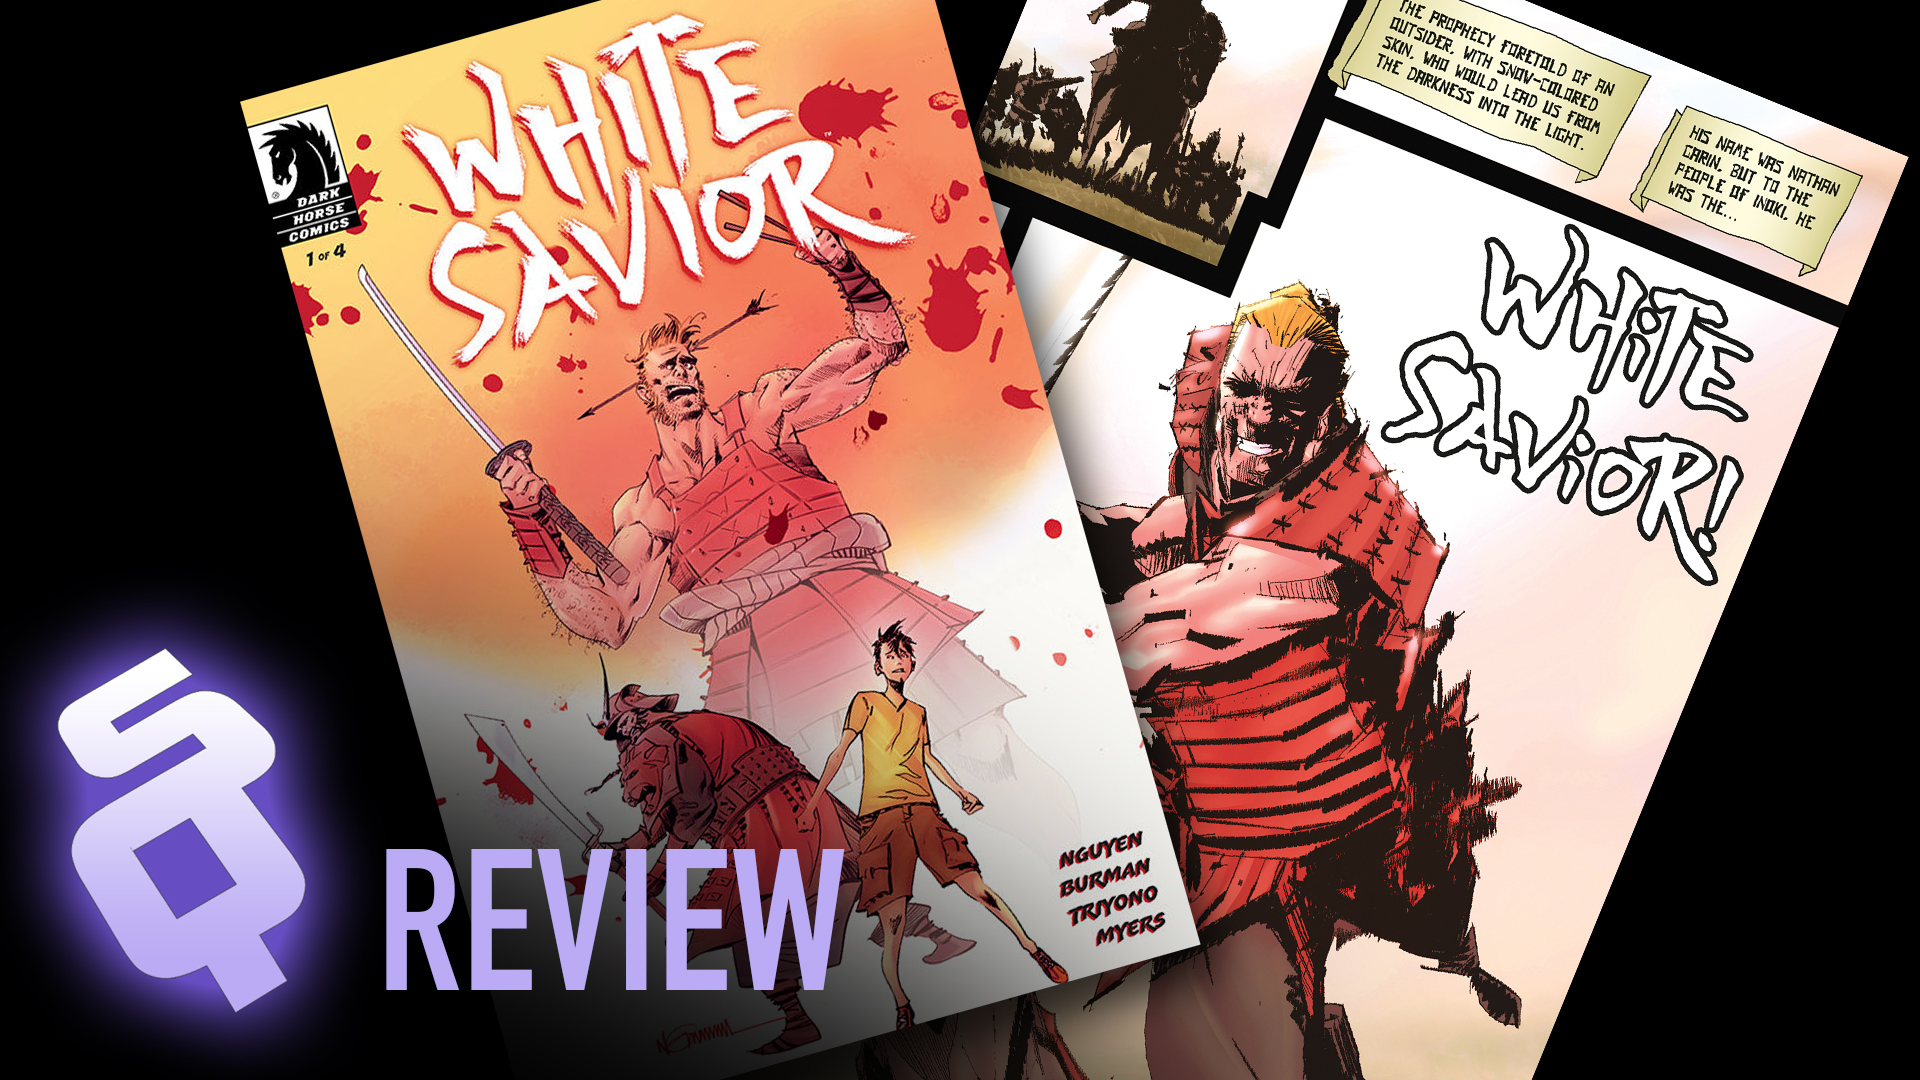 Comic book review: White Savior